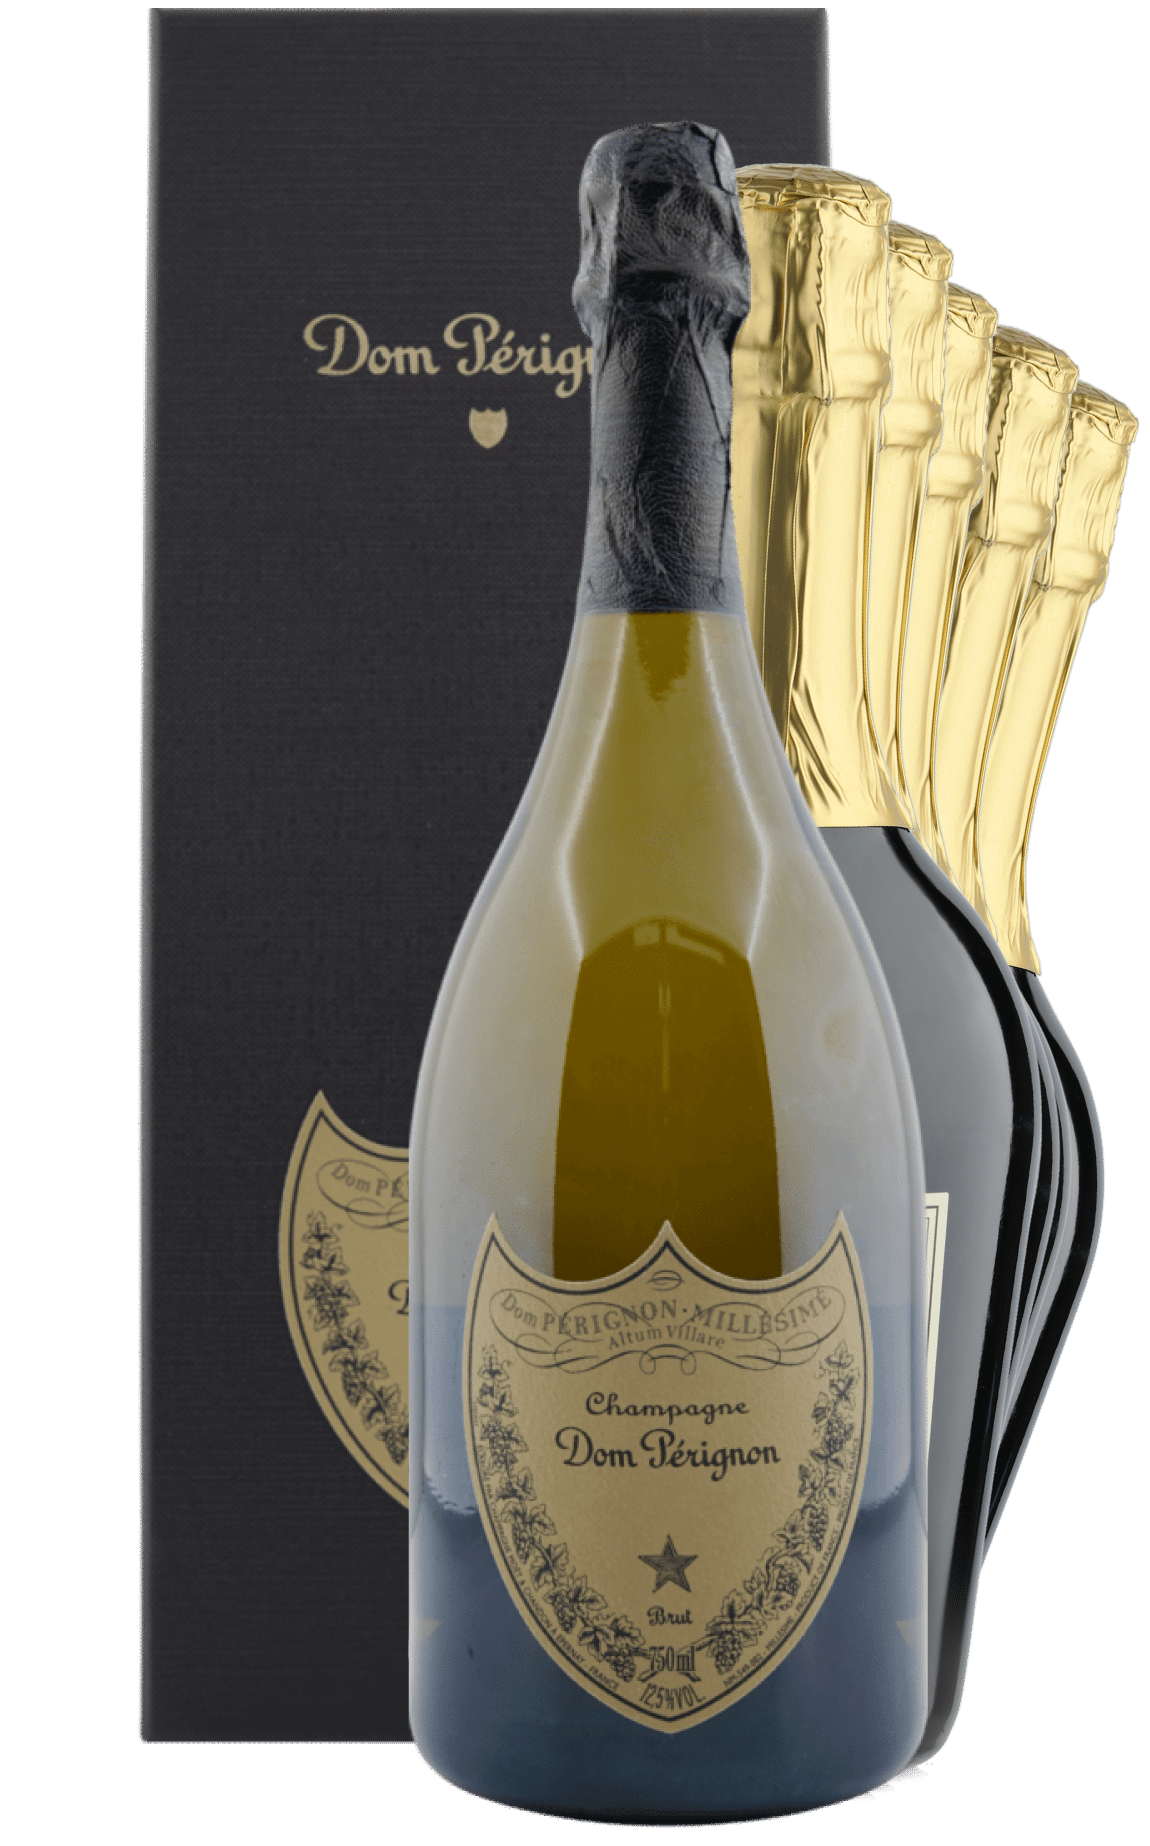 | 6 VERSAND* Fl. Wein Potzinger GRATIS Paket | | Onlineshop Sekt/Champagner